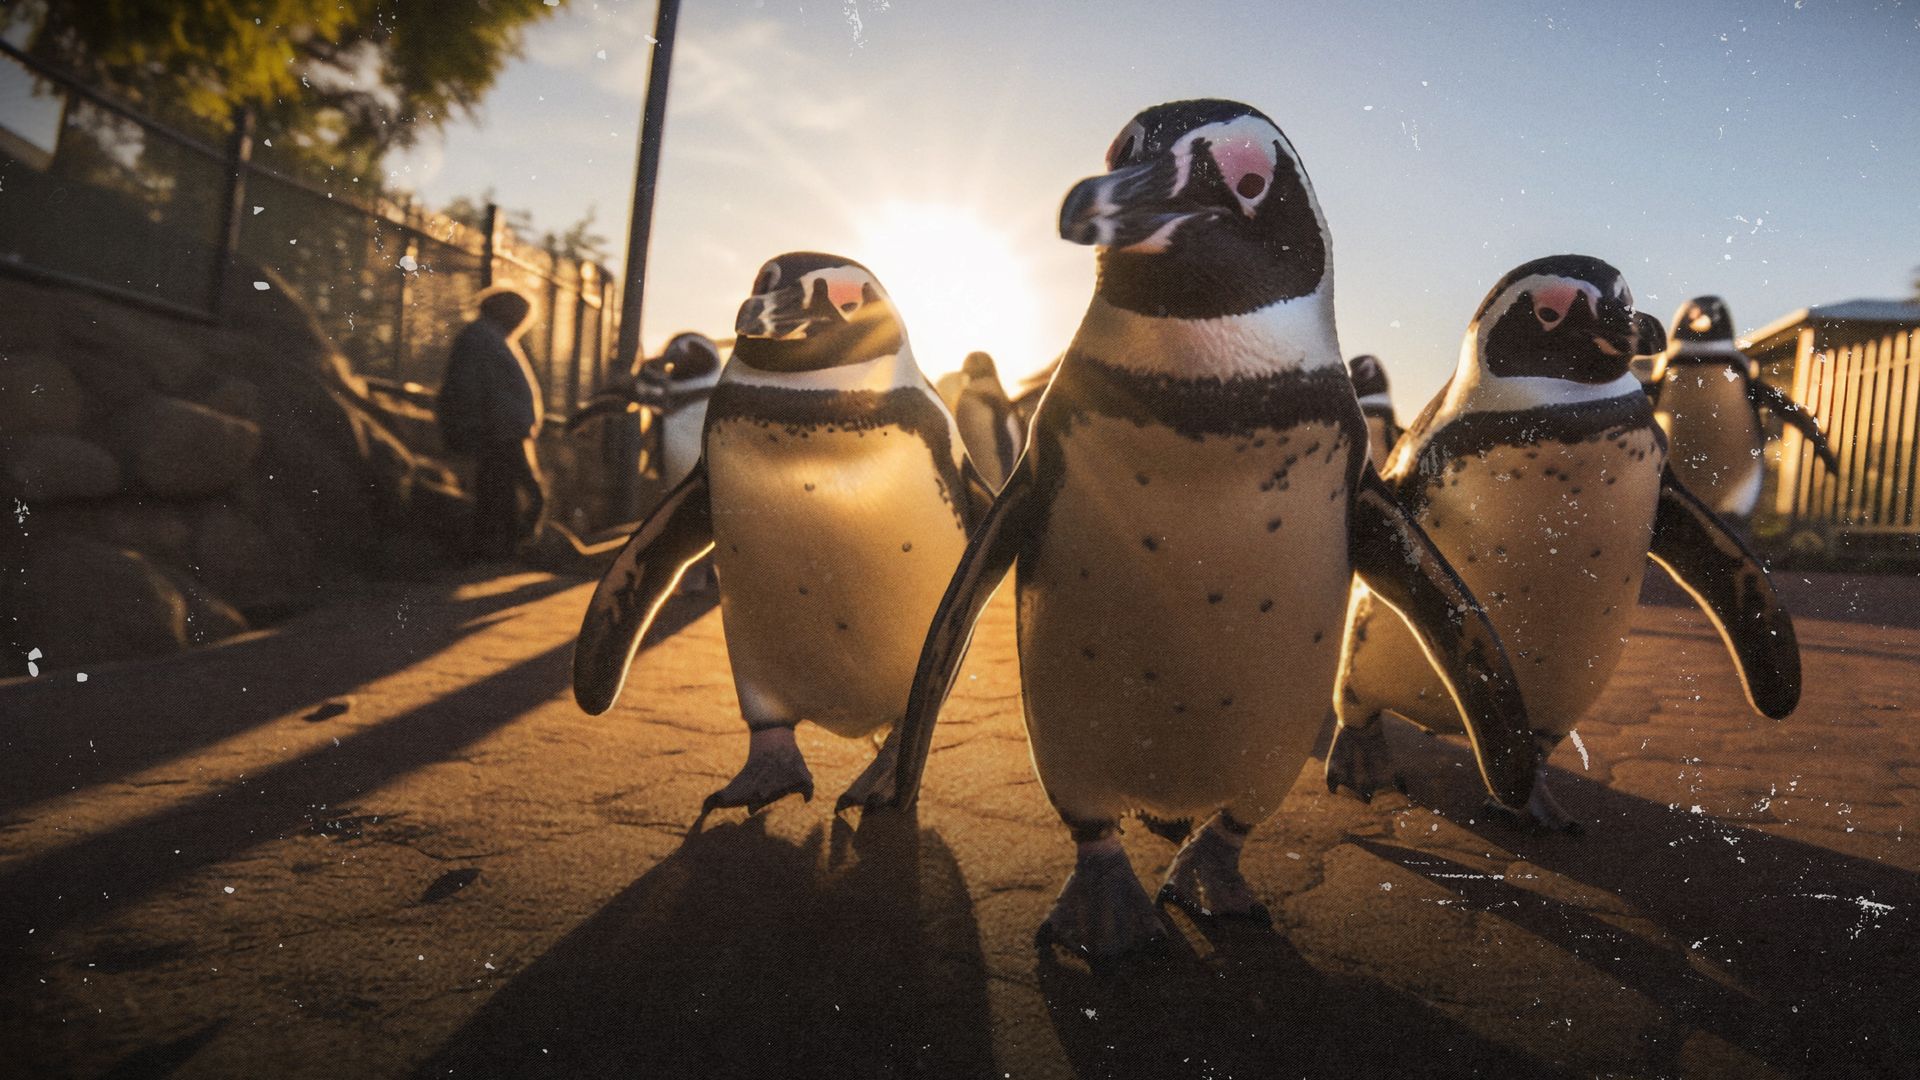 City Slickers: Penguin Invasion